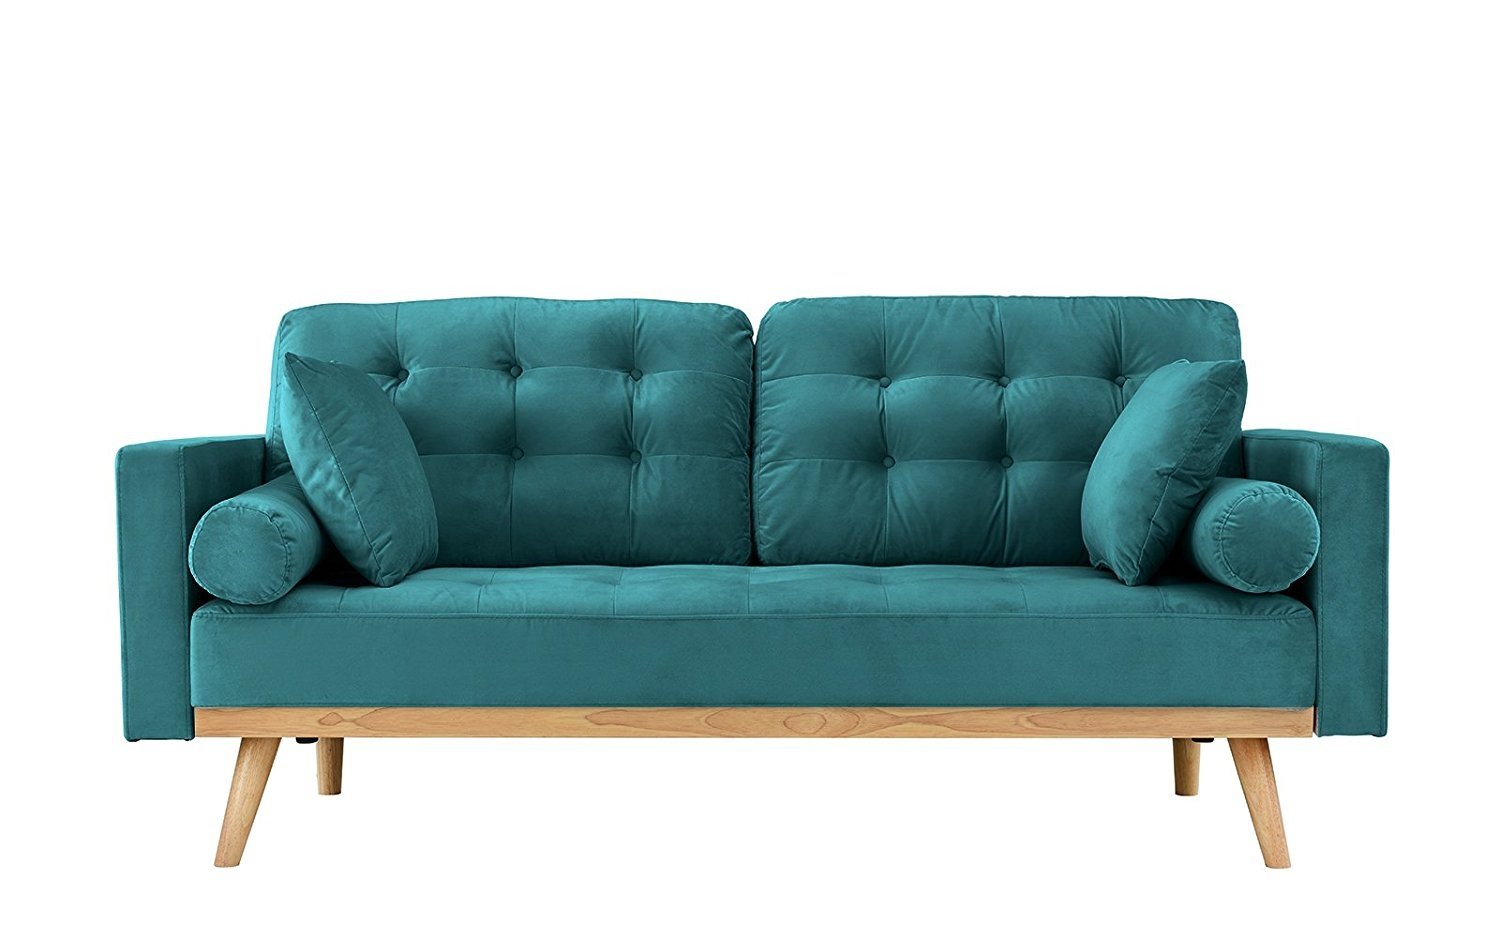 MidCentury Modern Couch Tufted Velvet Fabric Love Seat